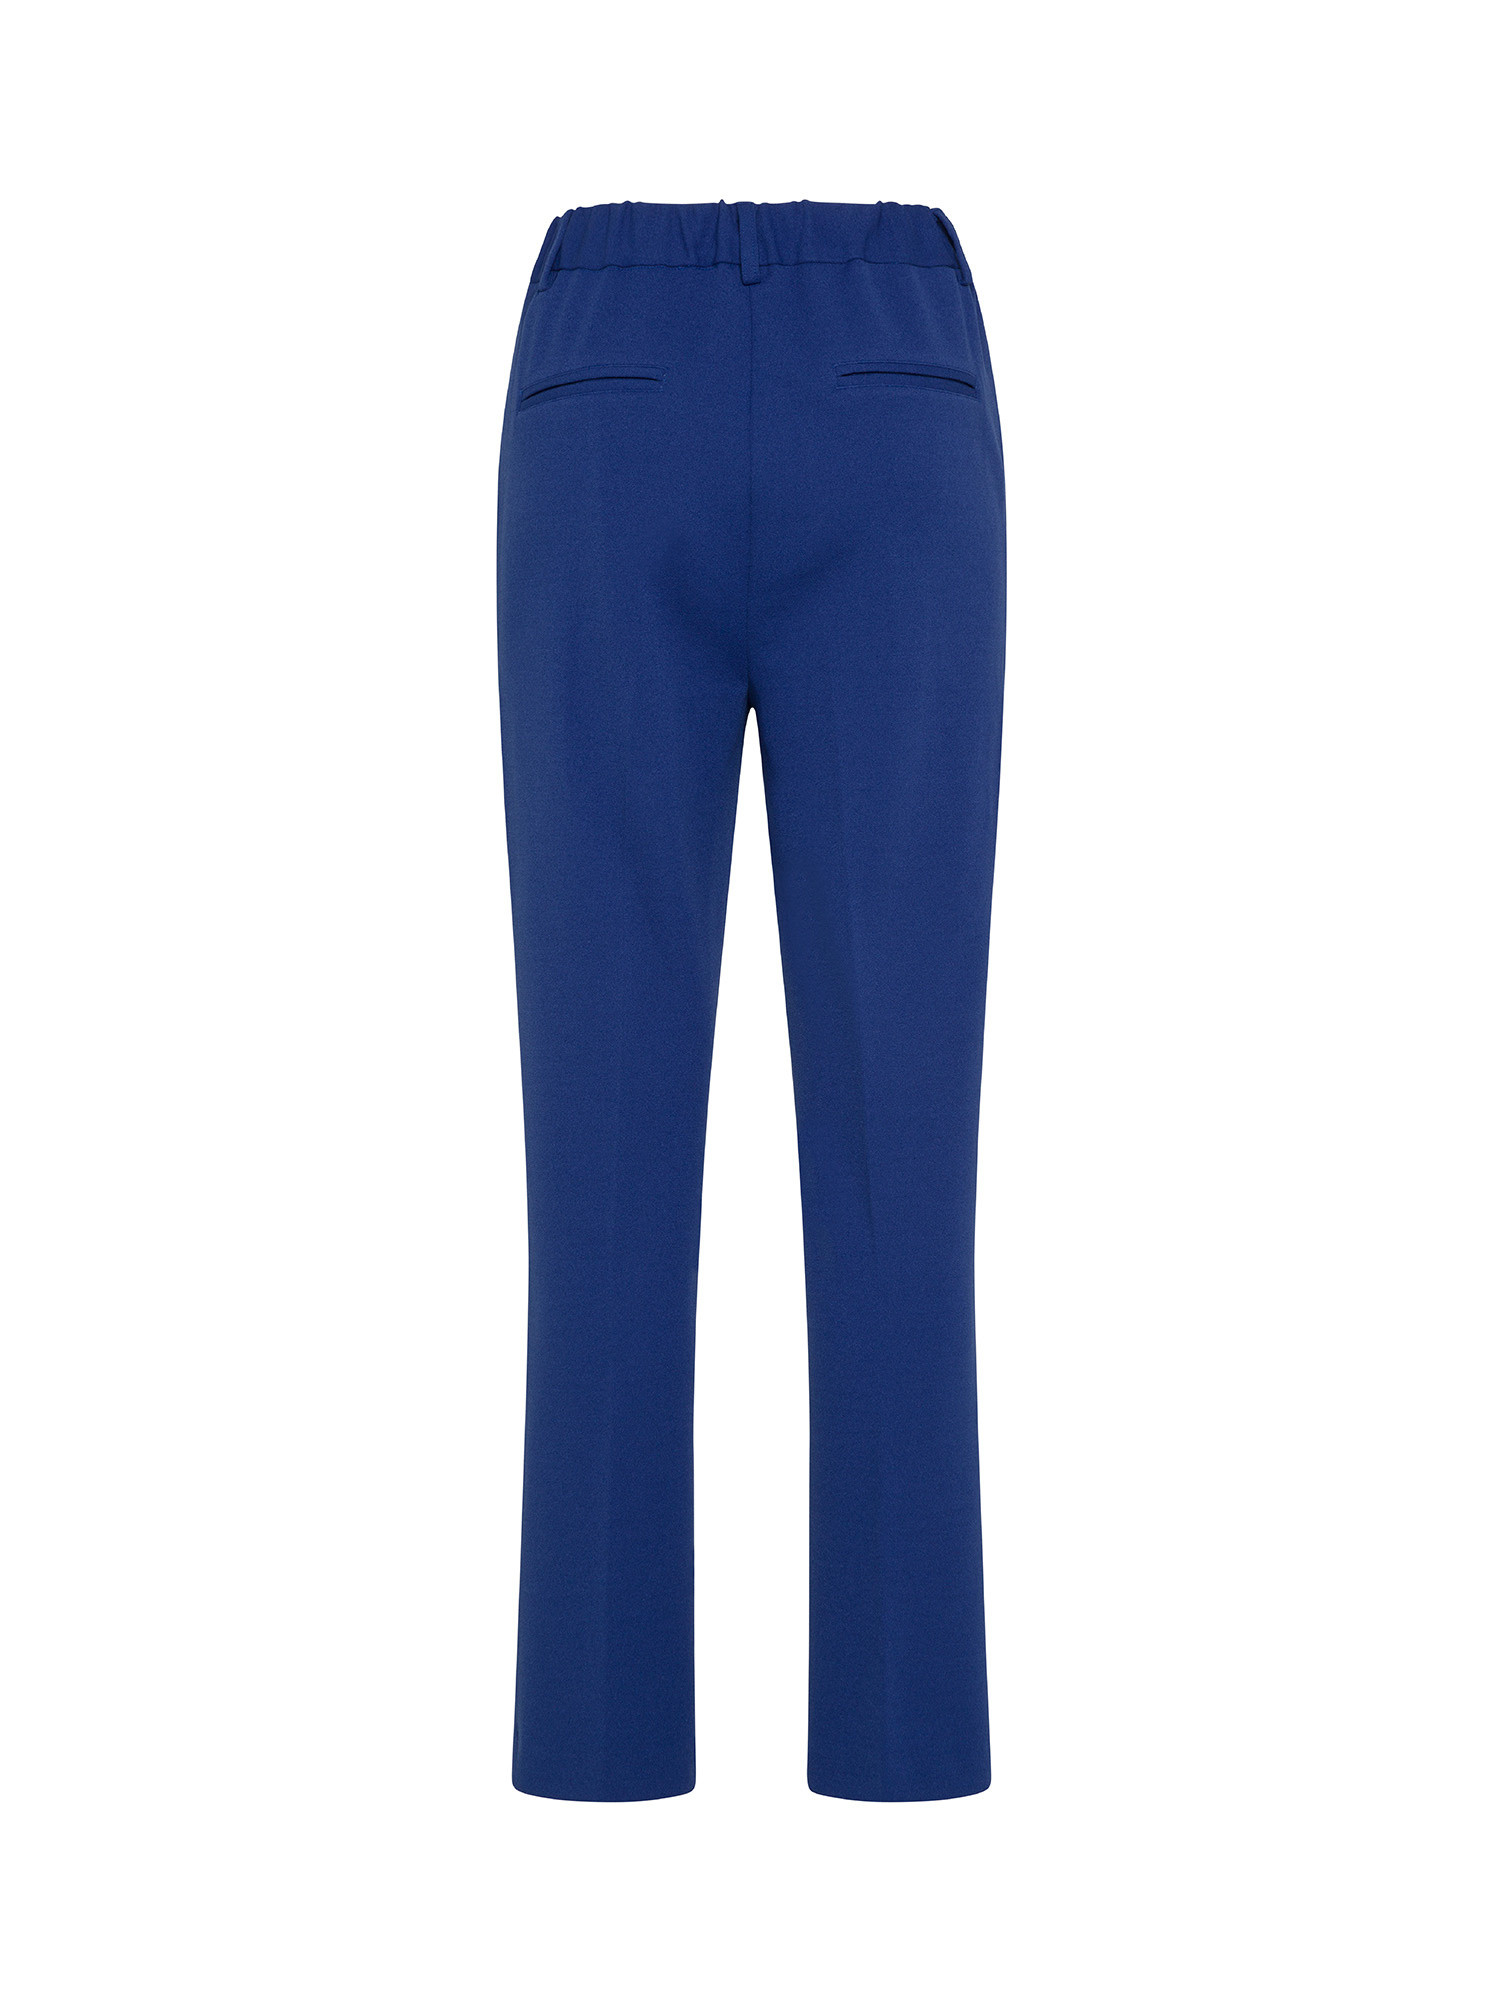 Koan - Crepe pants, Royal Blue, large image number 1